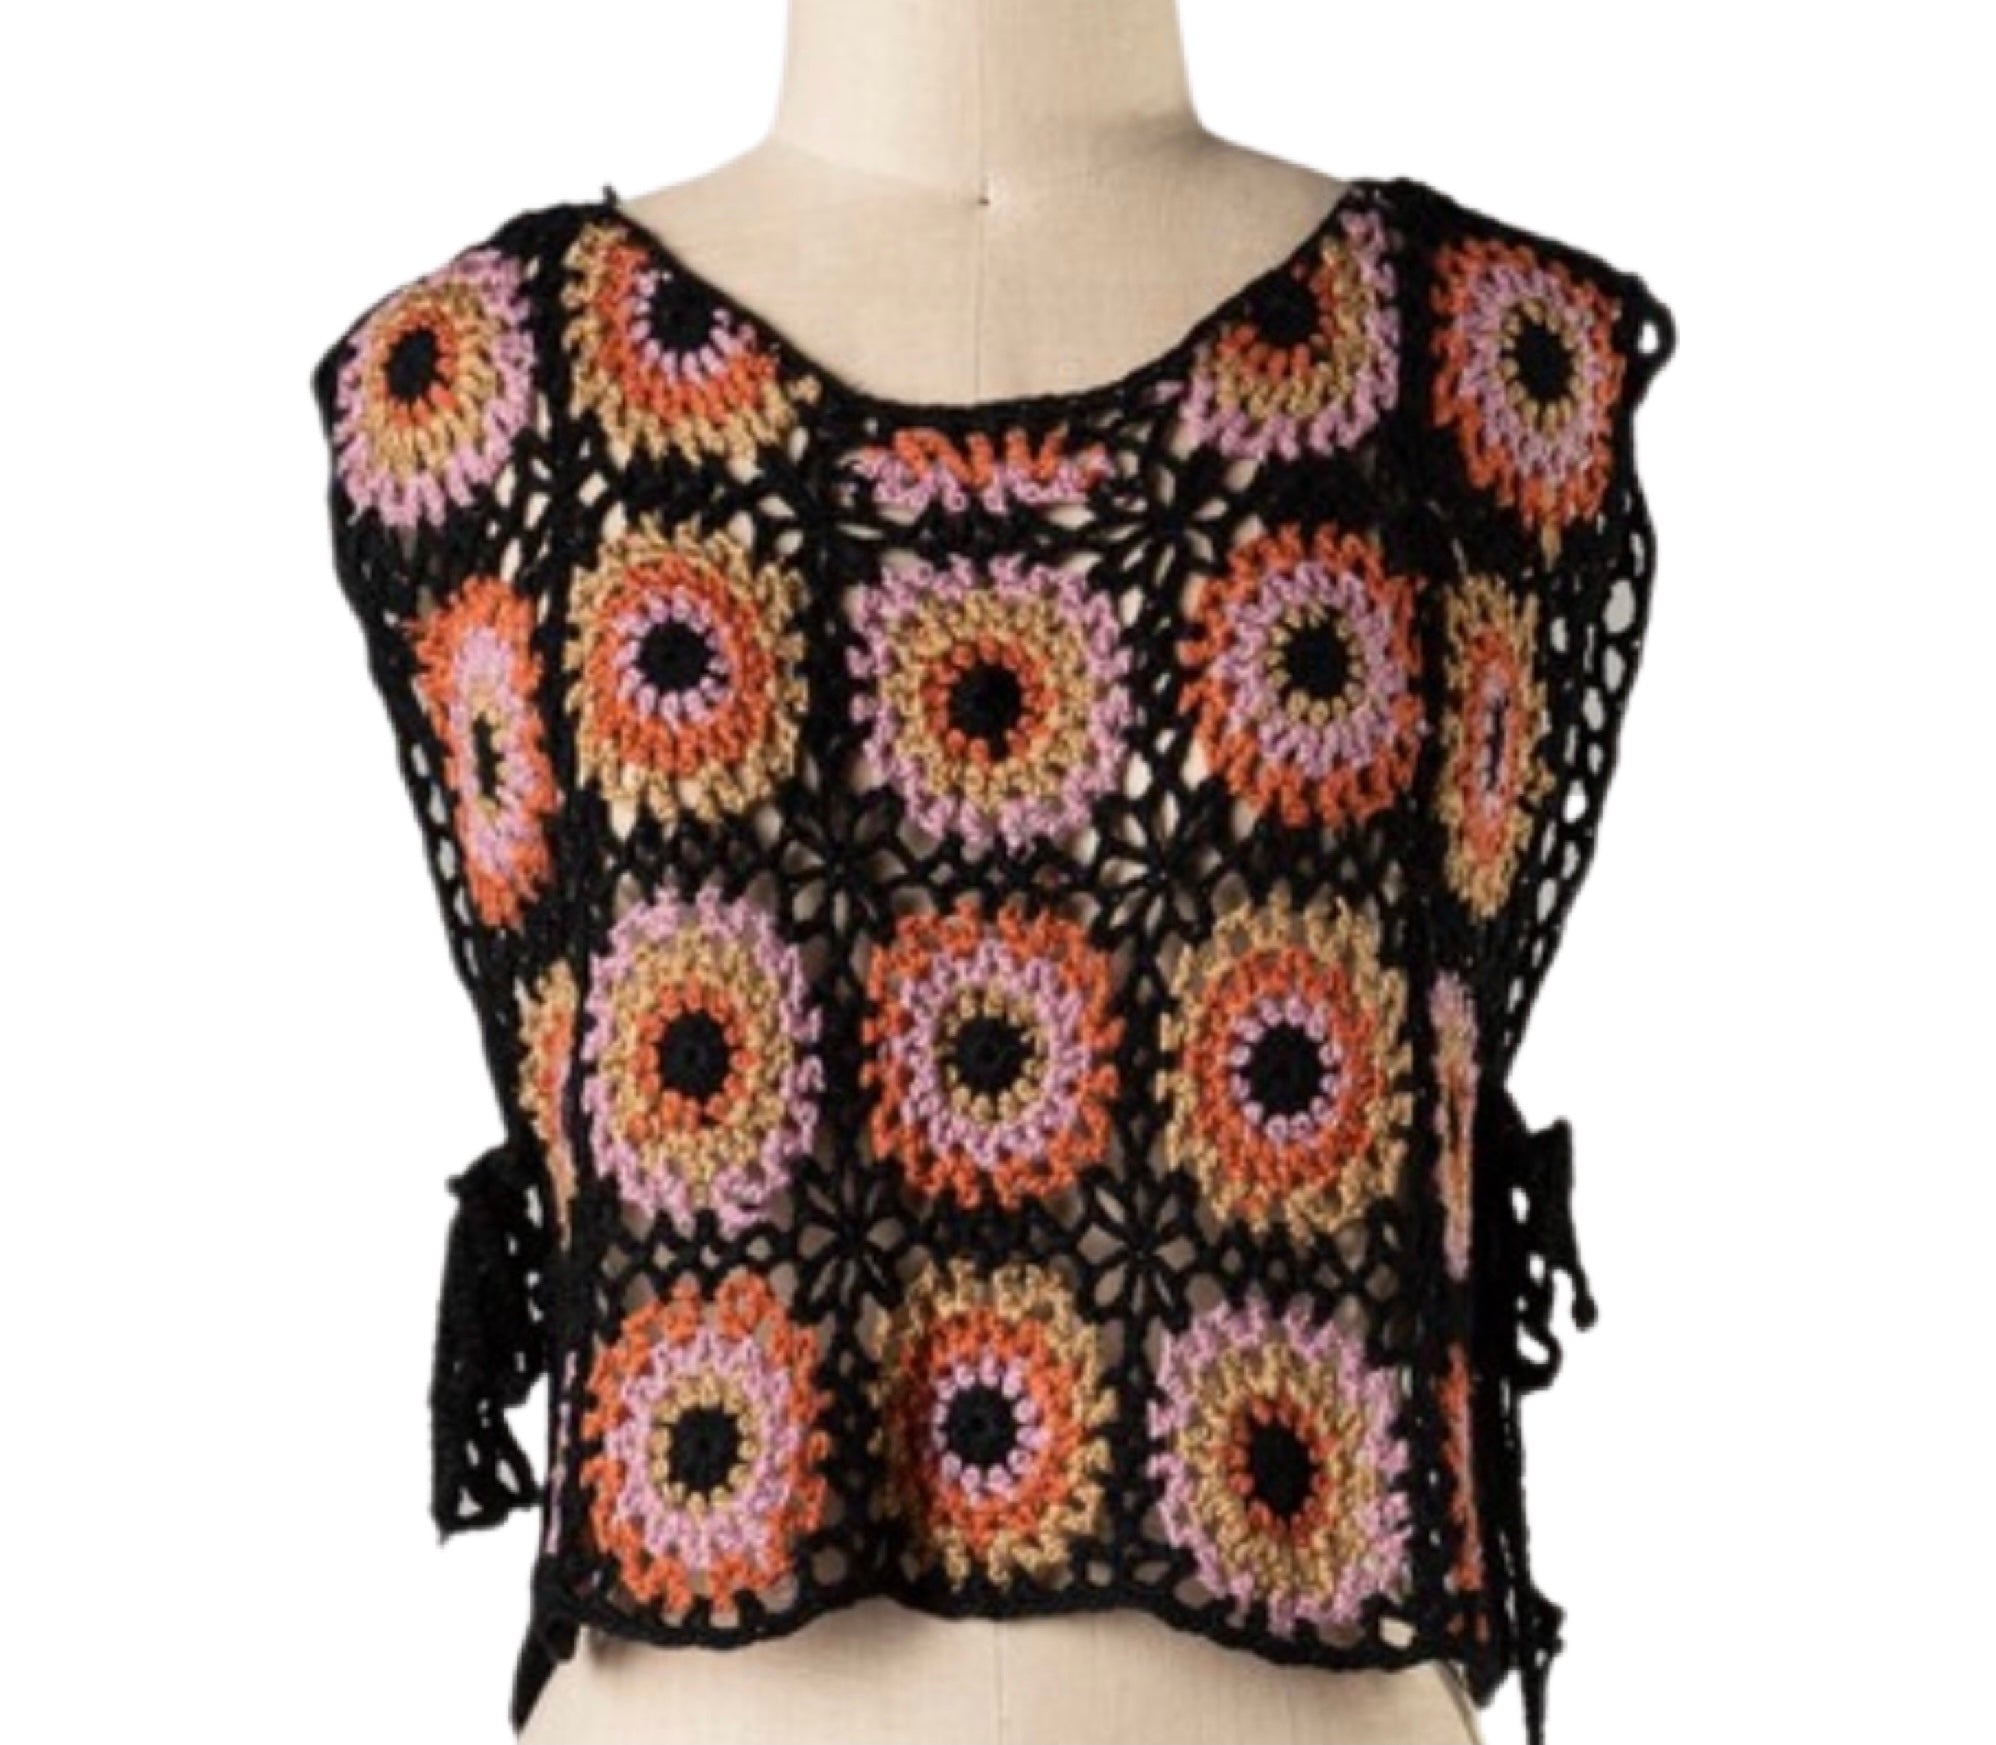 GOLDxTEAL colorful crochet vest top. Loose crochet top. Summer style.